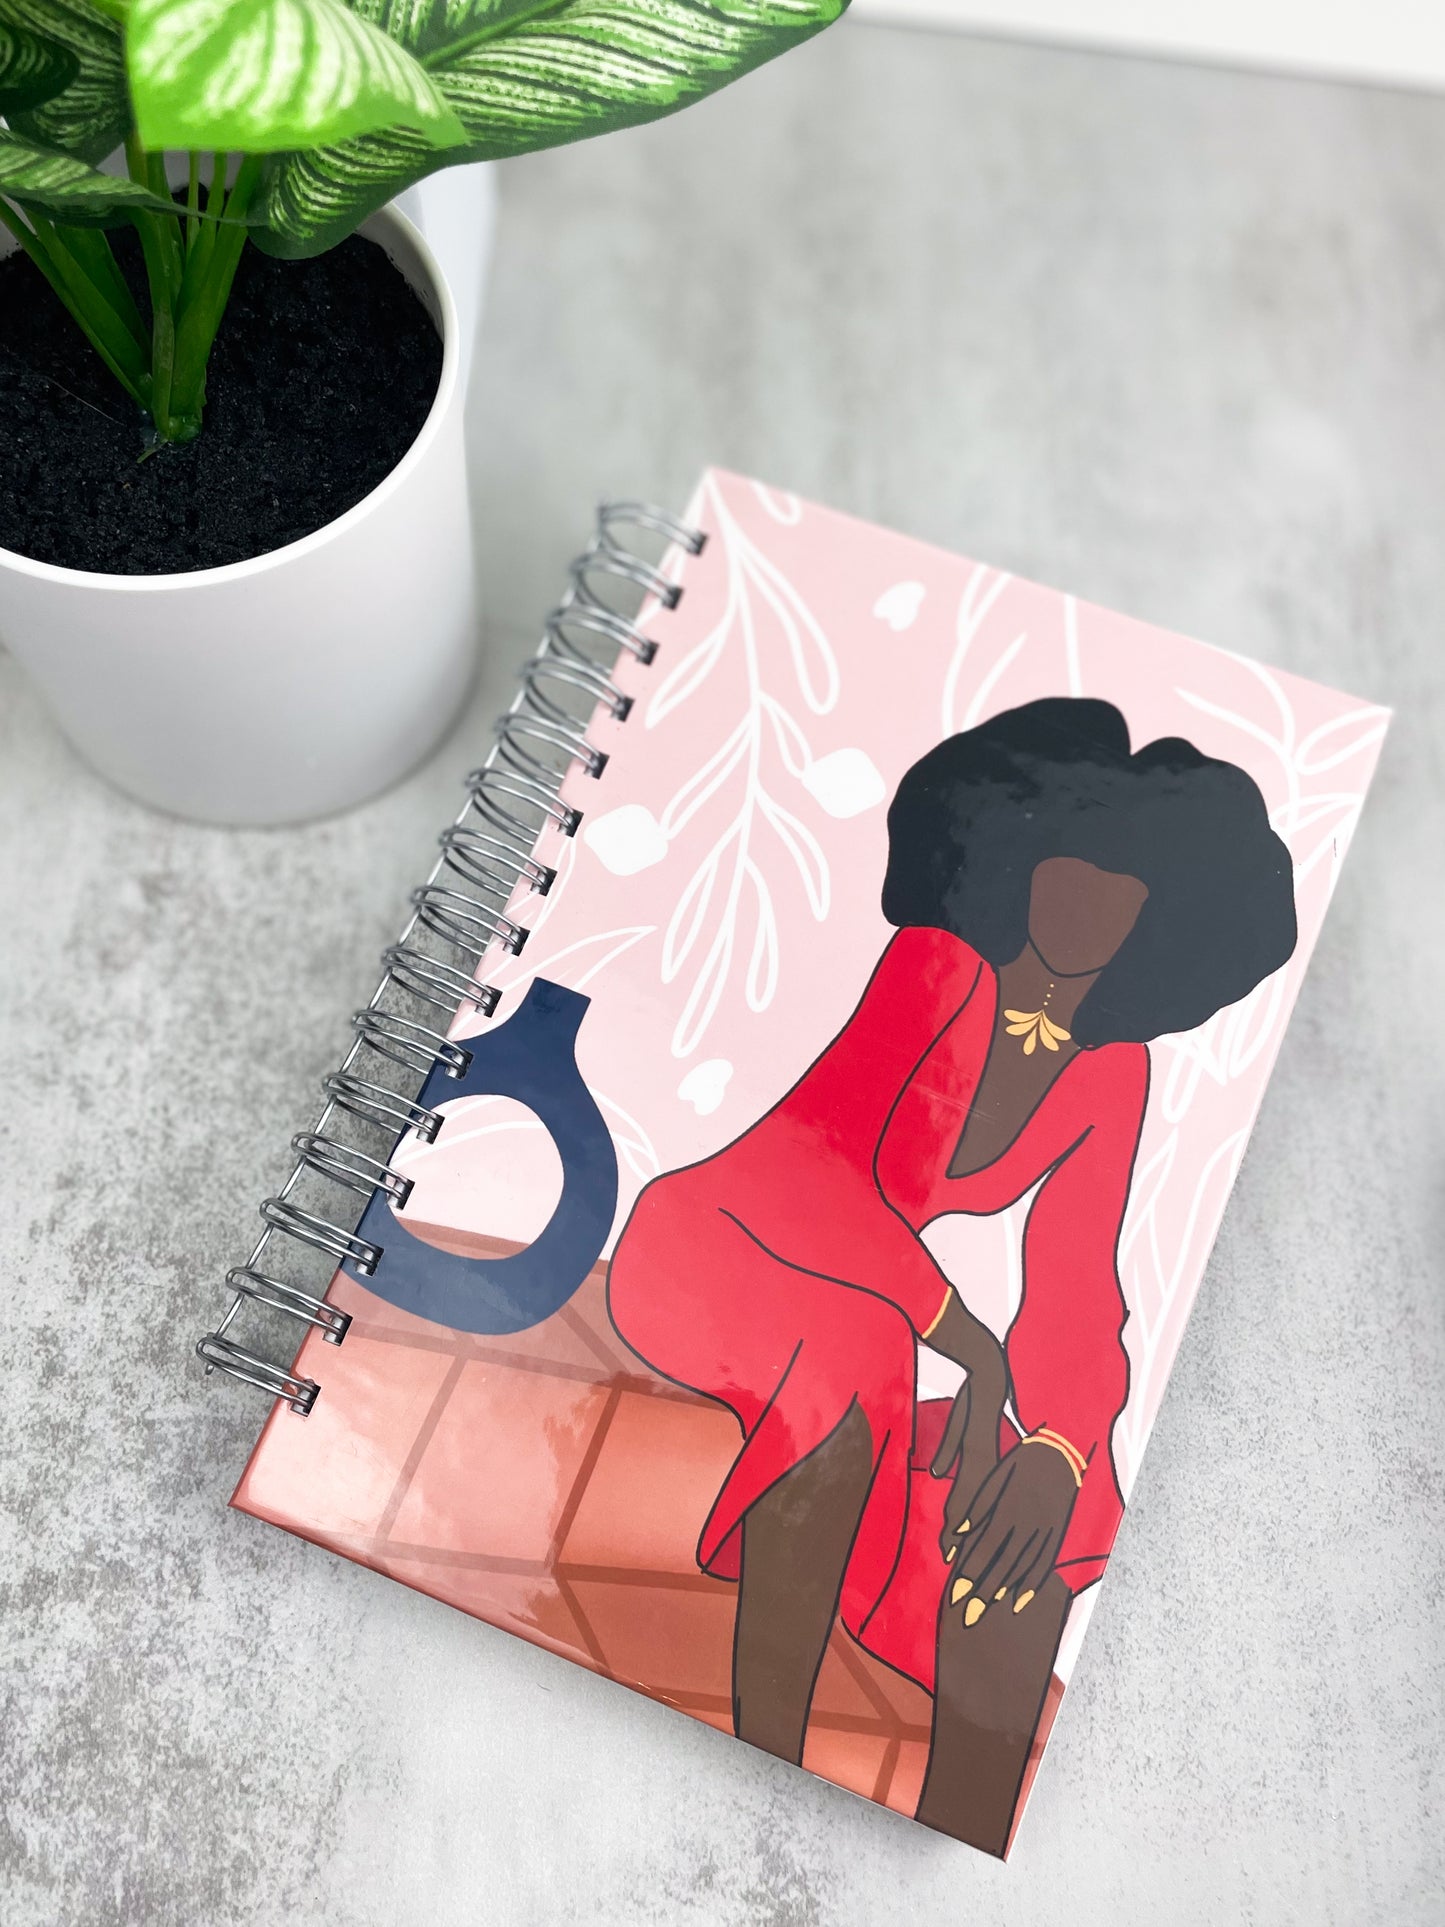 I'm a Boss Lady | Journal | Sketchbook